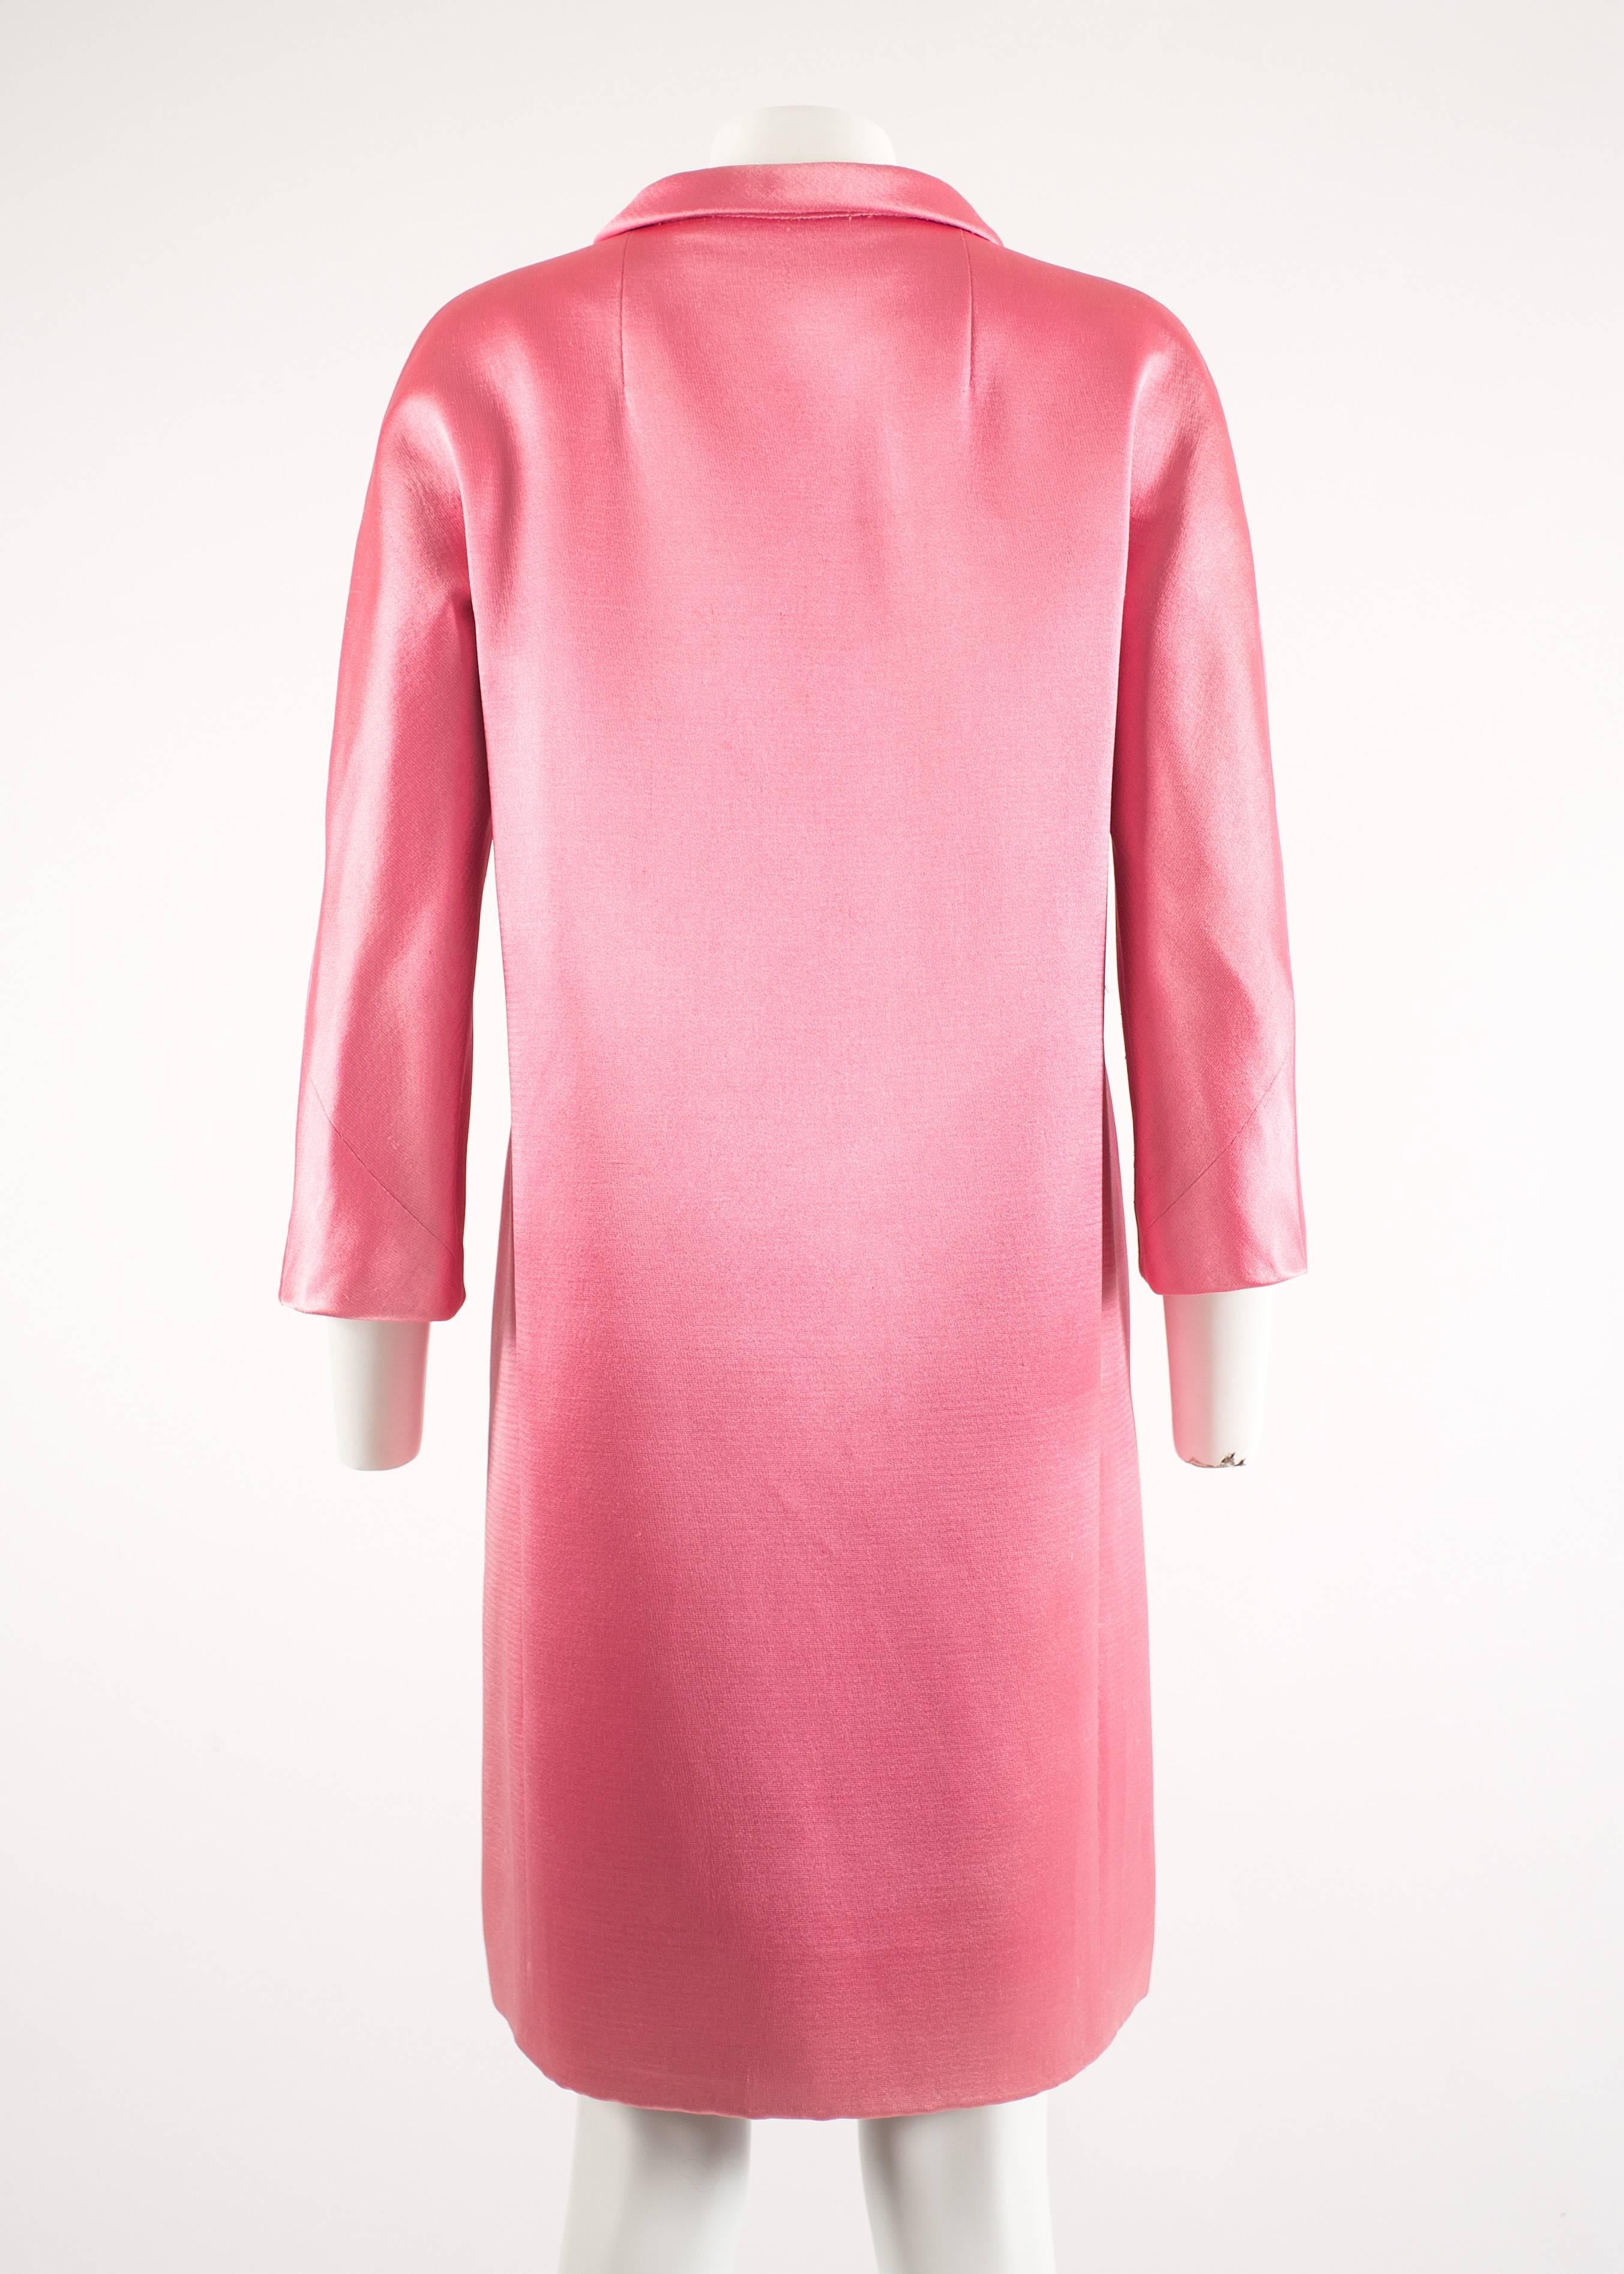 Women's Balenciaga 1963 Haute Couture hot pink silk evening coat